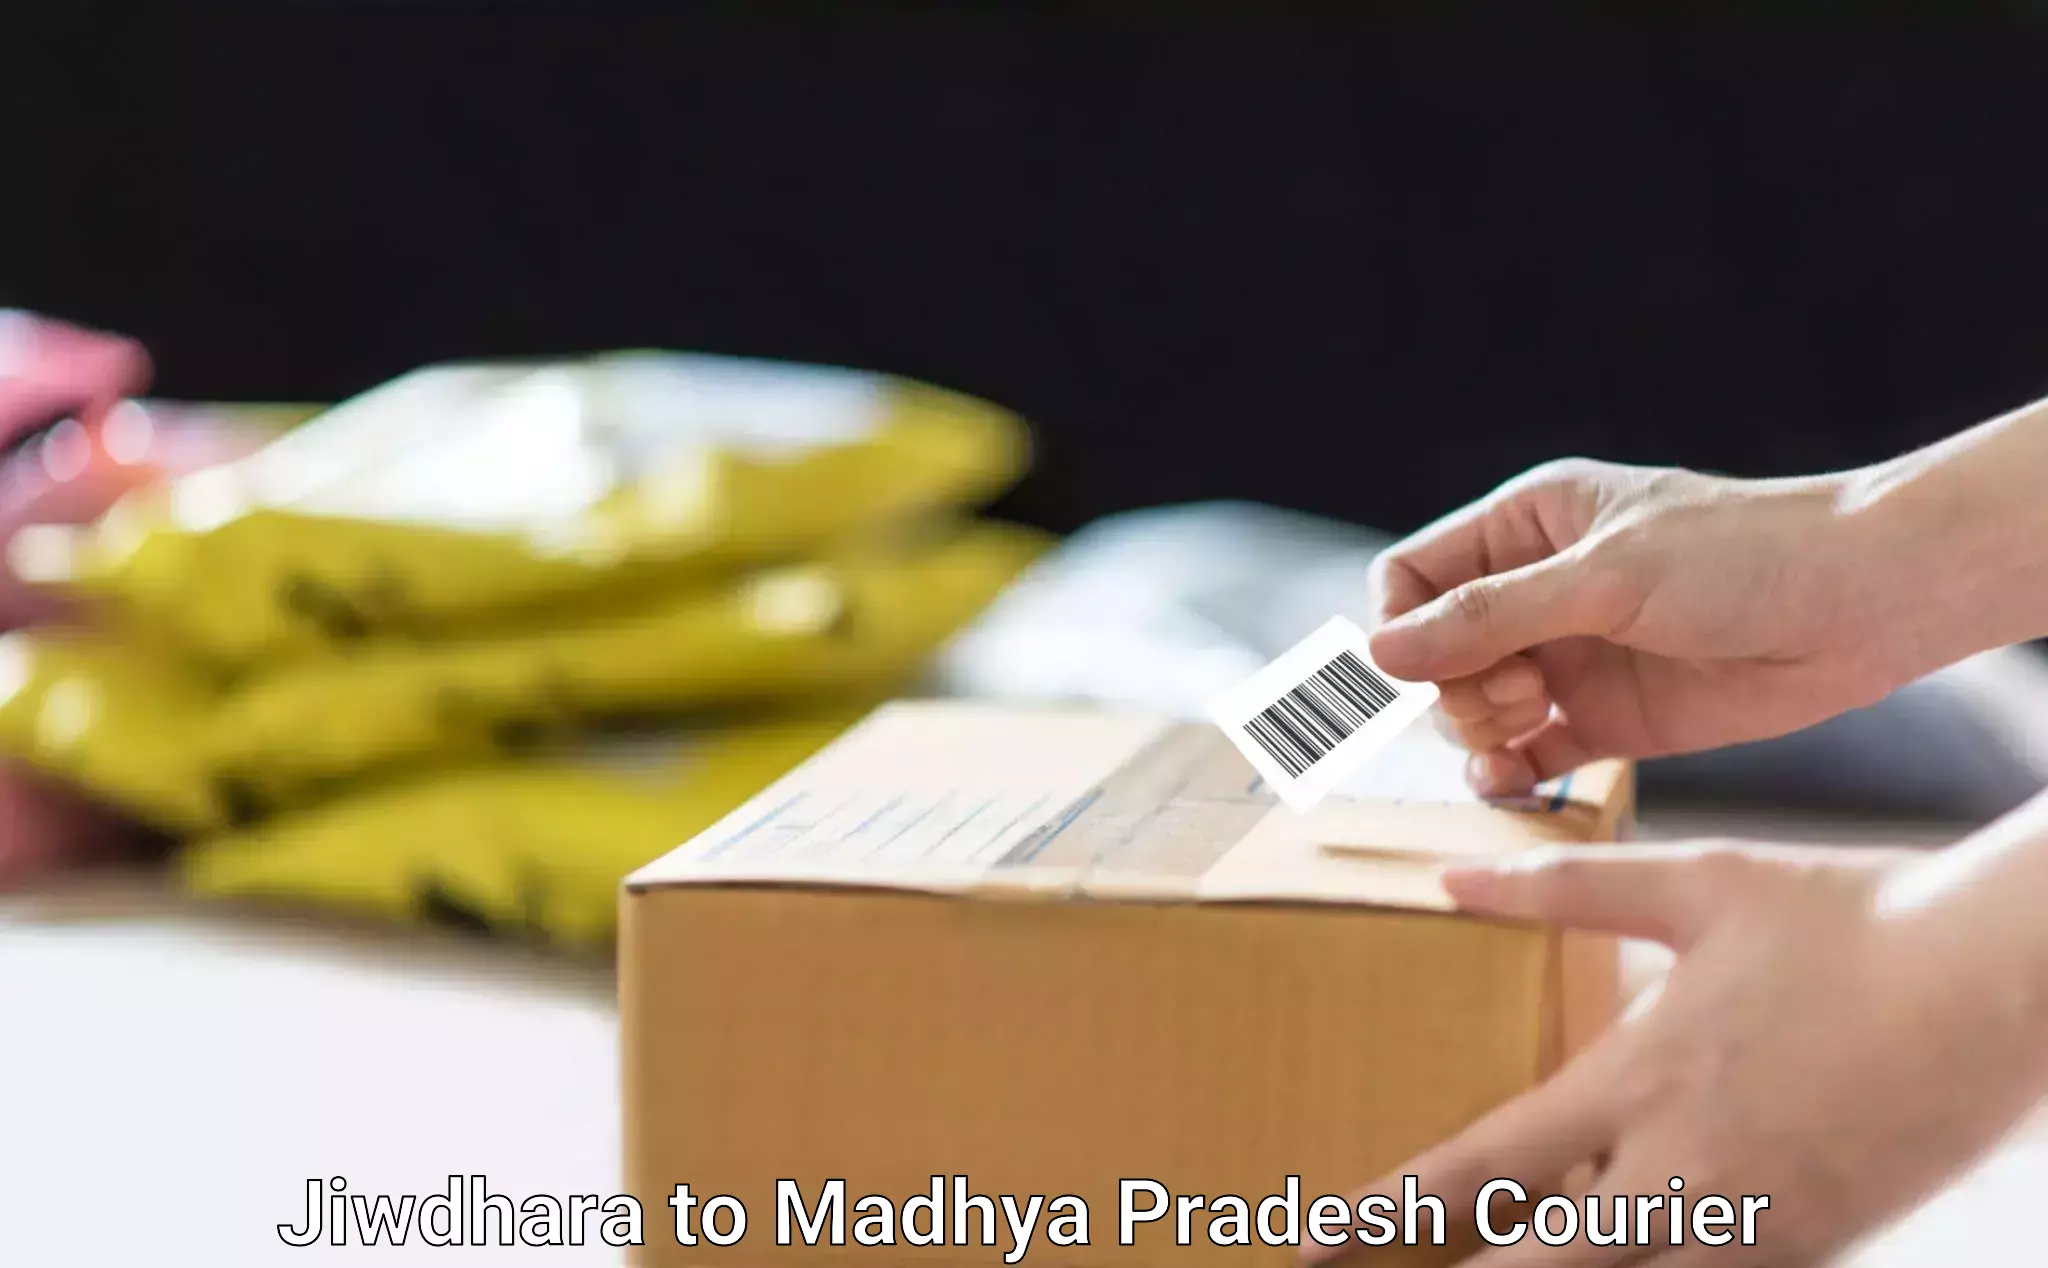 Quality moving and storage Jiwdhara to Madhya Pradesh